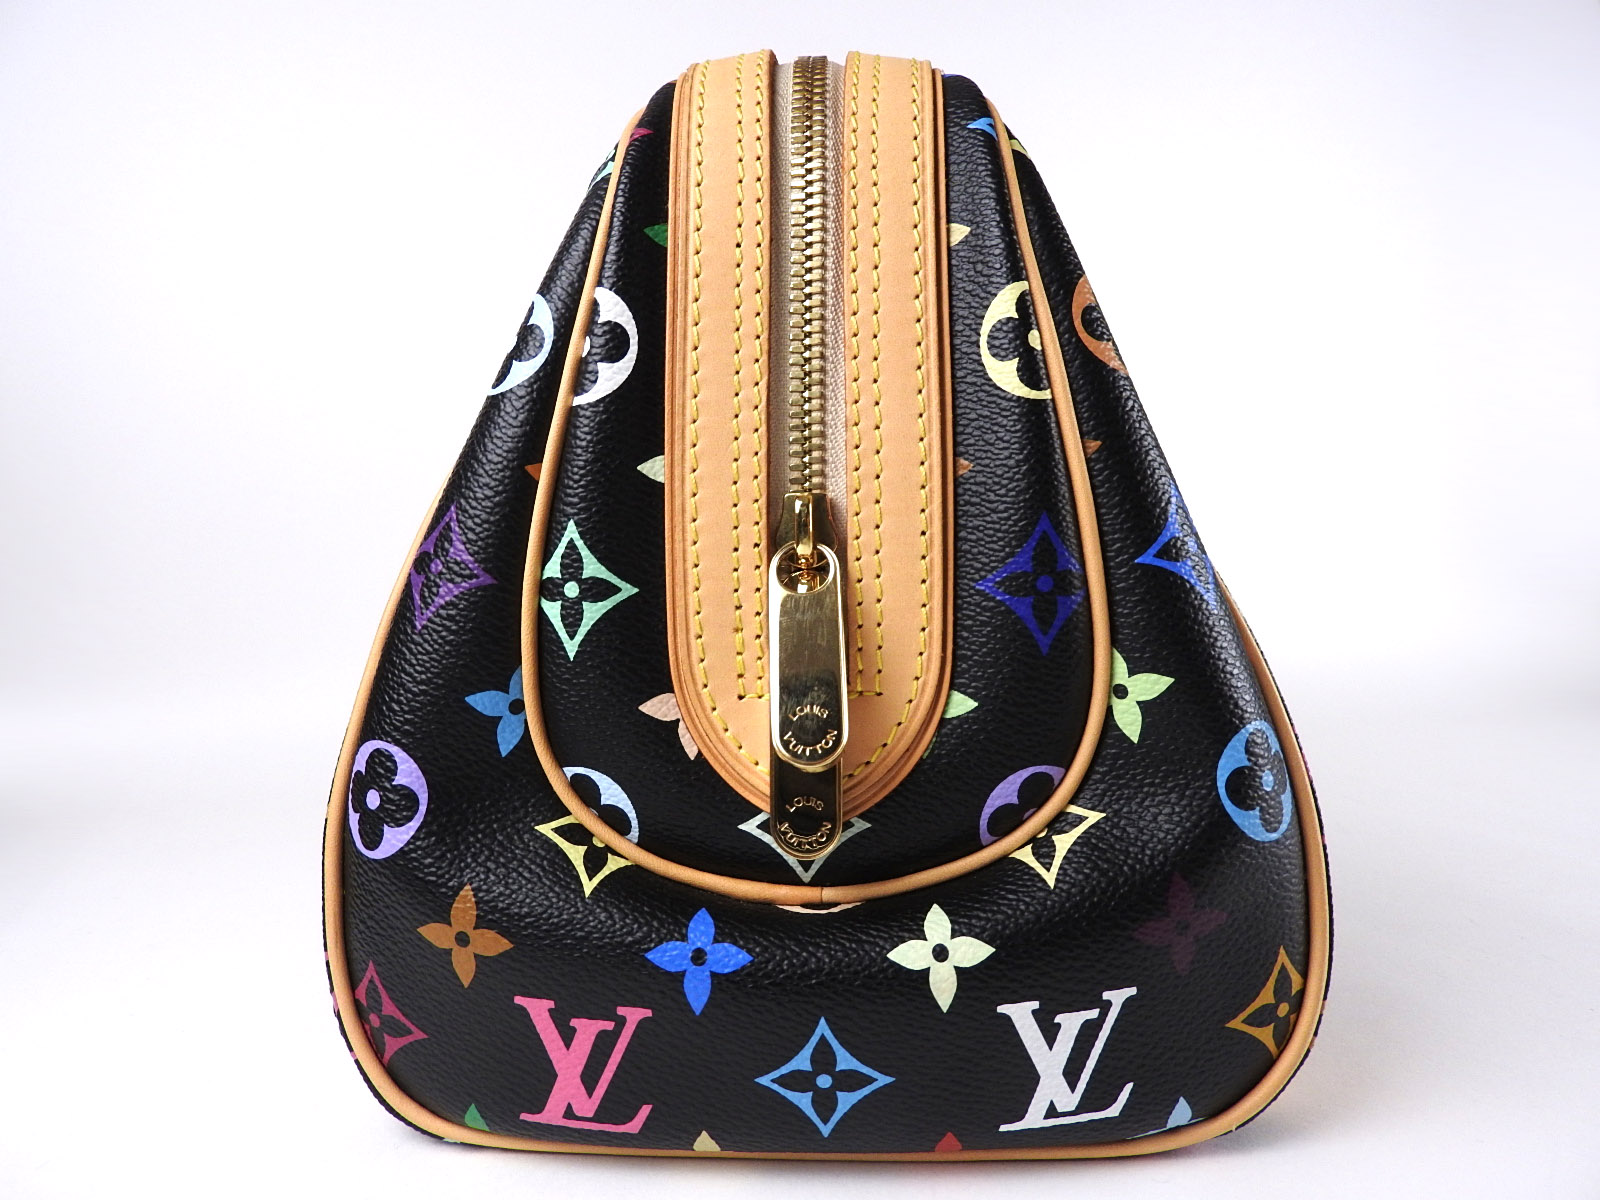 Louis Vuitton Lodge handbag in black monogram canvas and natural